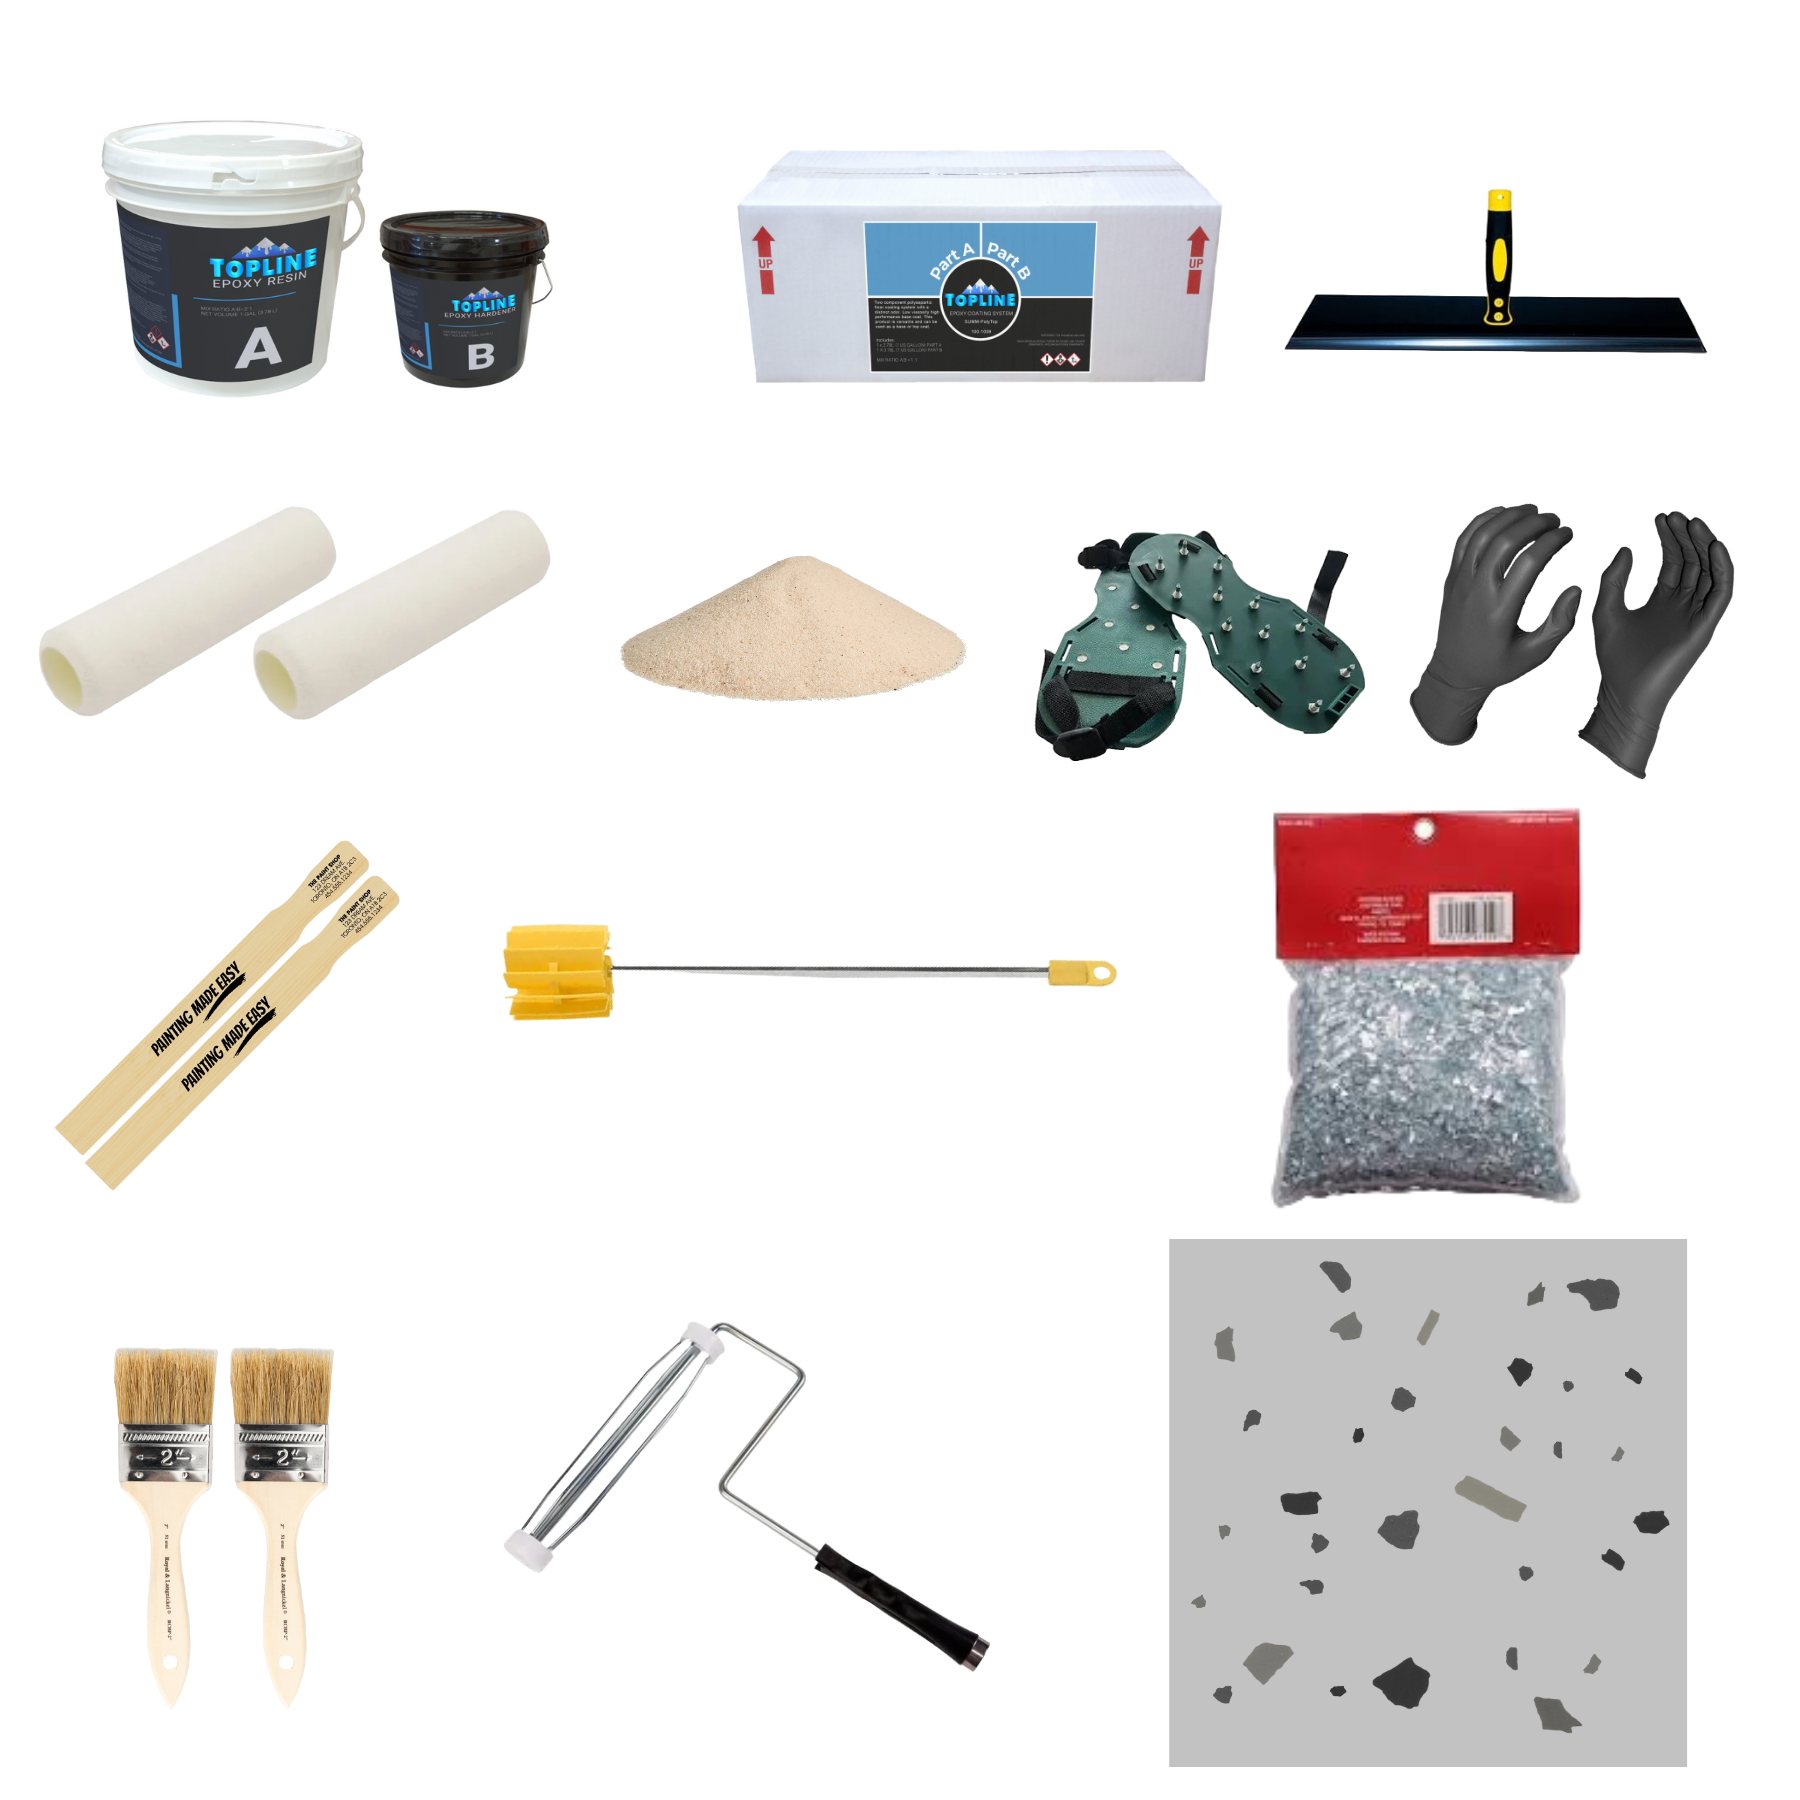 Garage Epoxy Floor Kit for Concrete - 12-Pc 2 Part, Industrial Grade Epoxy Floor Coating, Polyaspartic - 400 SqFt Coverage- for Garage, Basement, Workshop, Contractor, Automotive